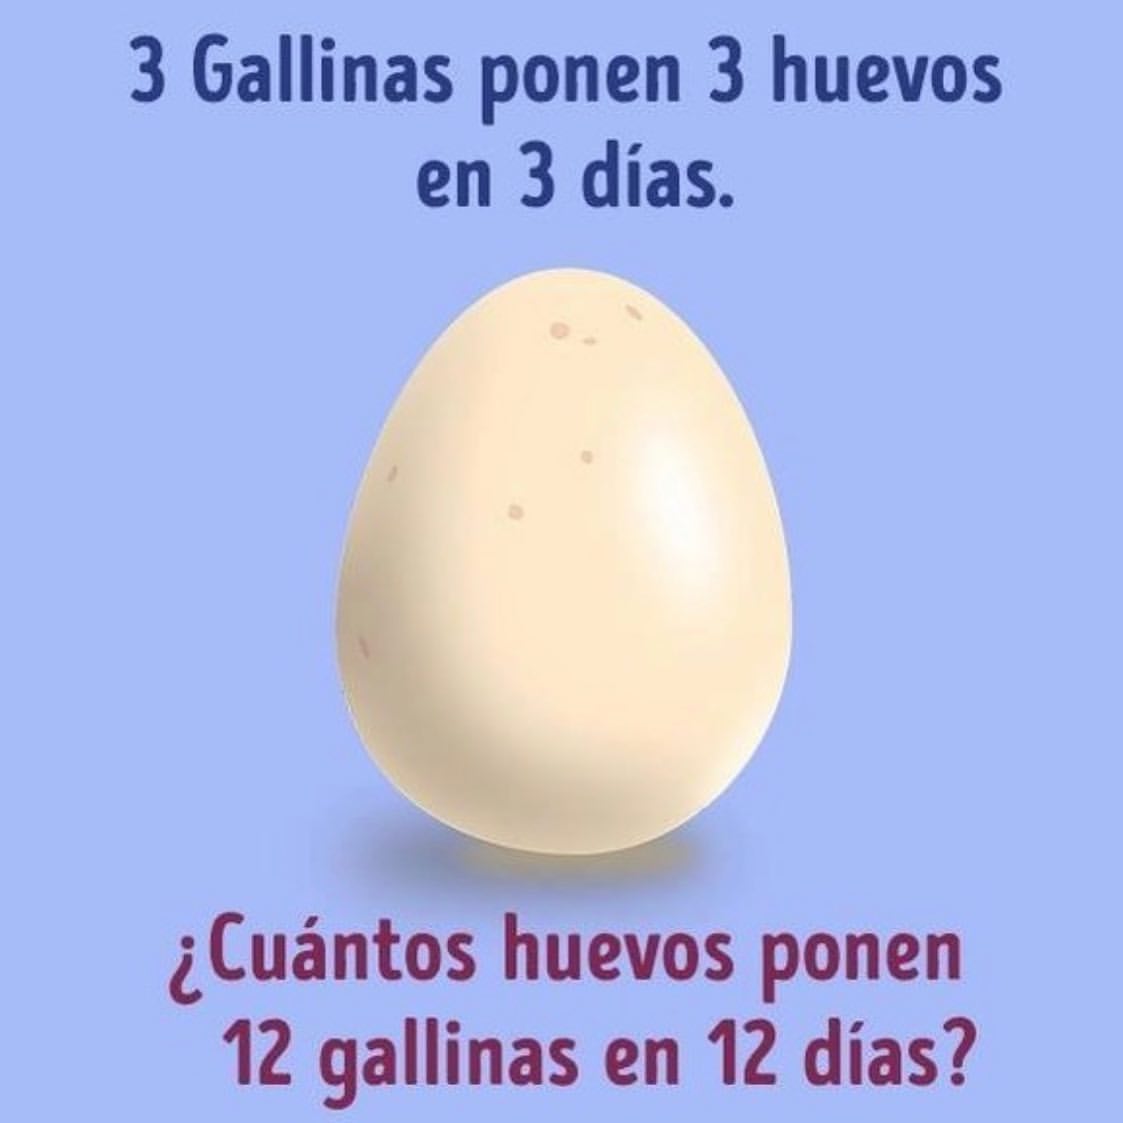 3 Gallinas ponen 3 huevos en 3 días. ¿Cuántos huevos ponen 12 gallinas en 12 días?